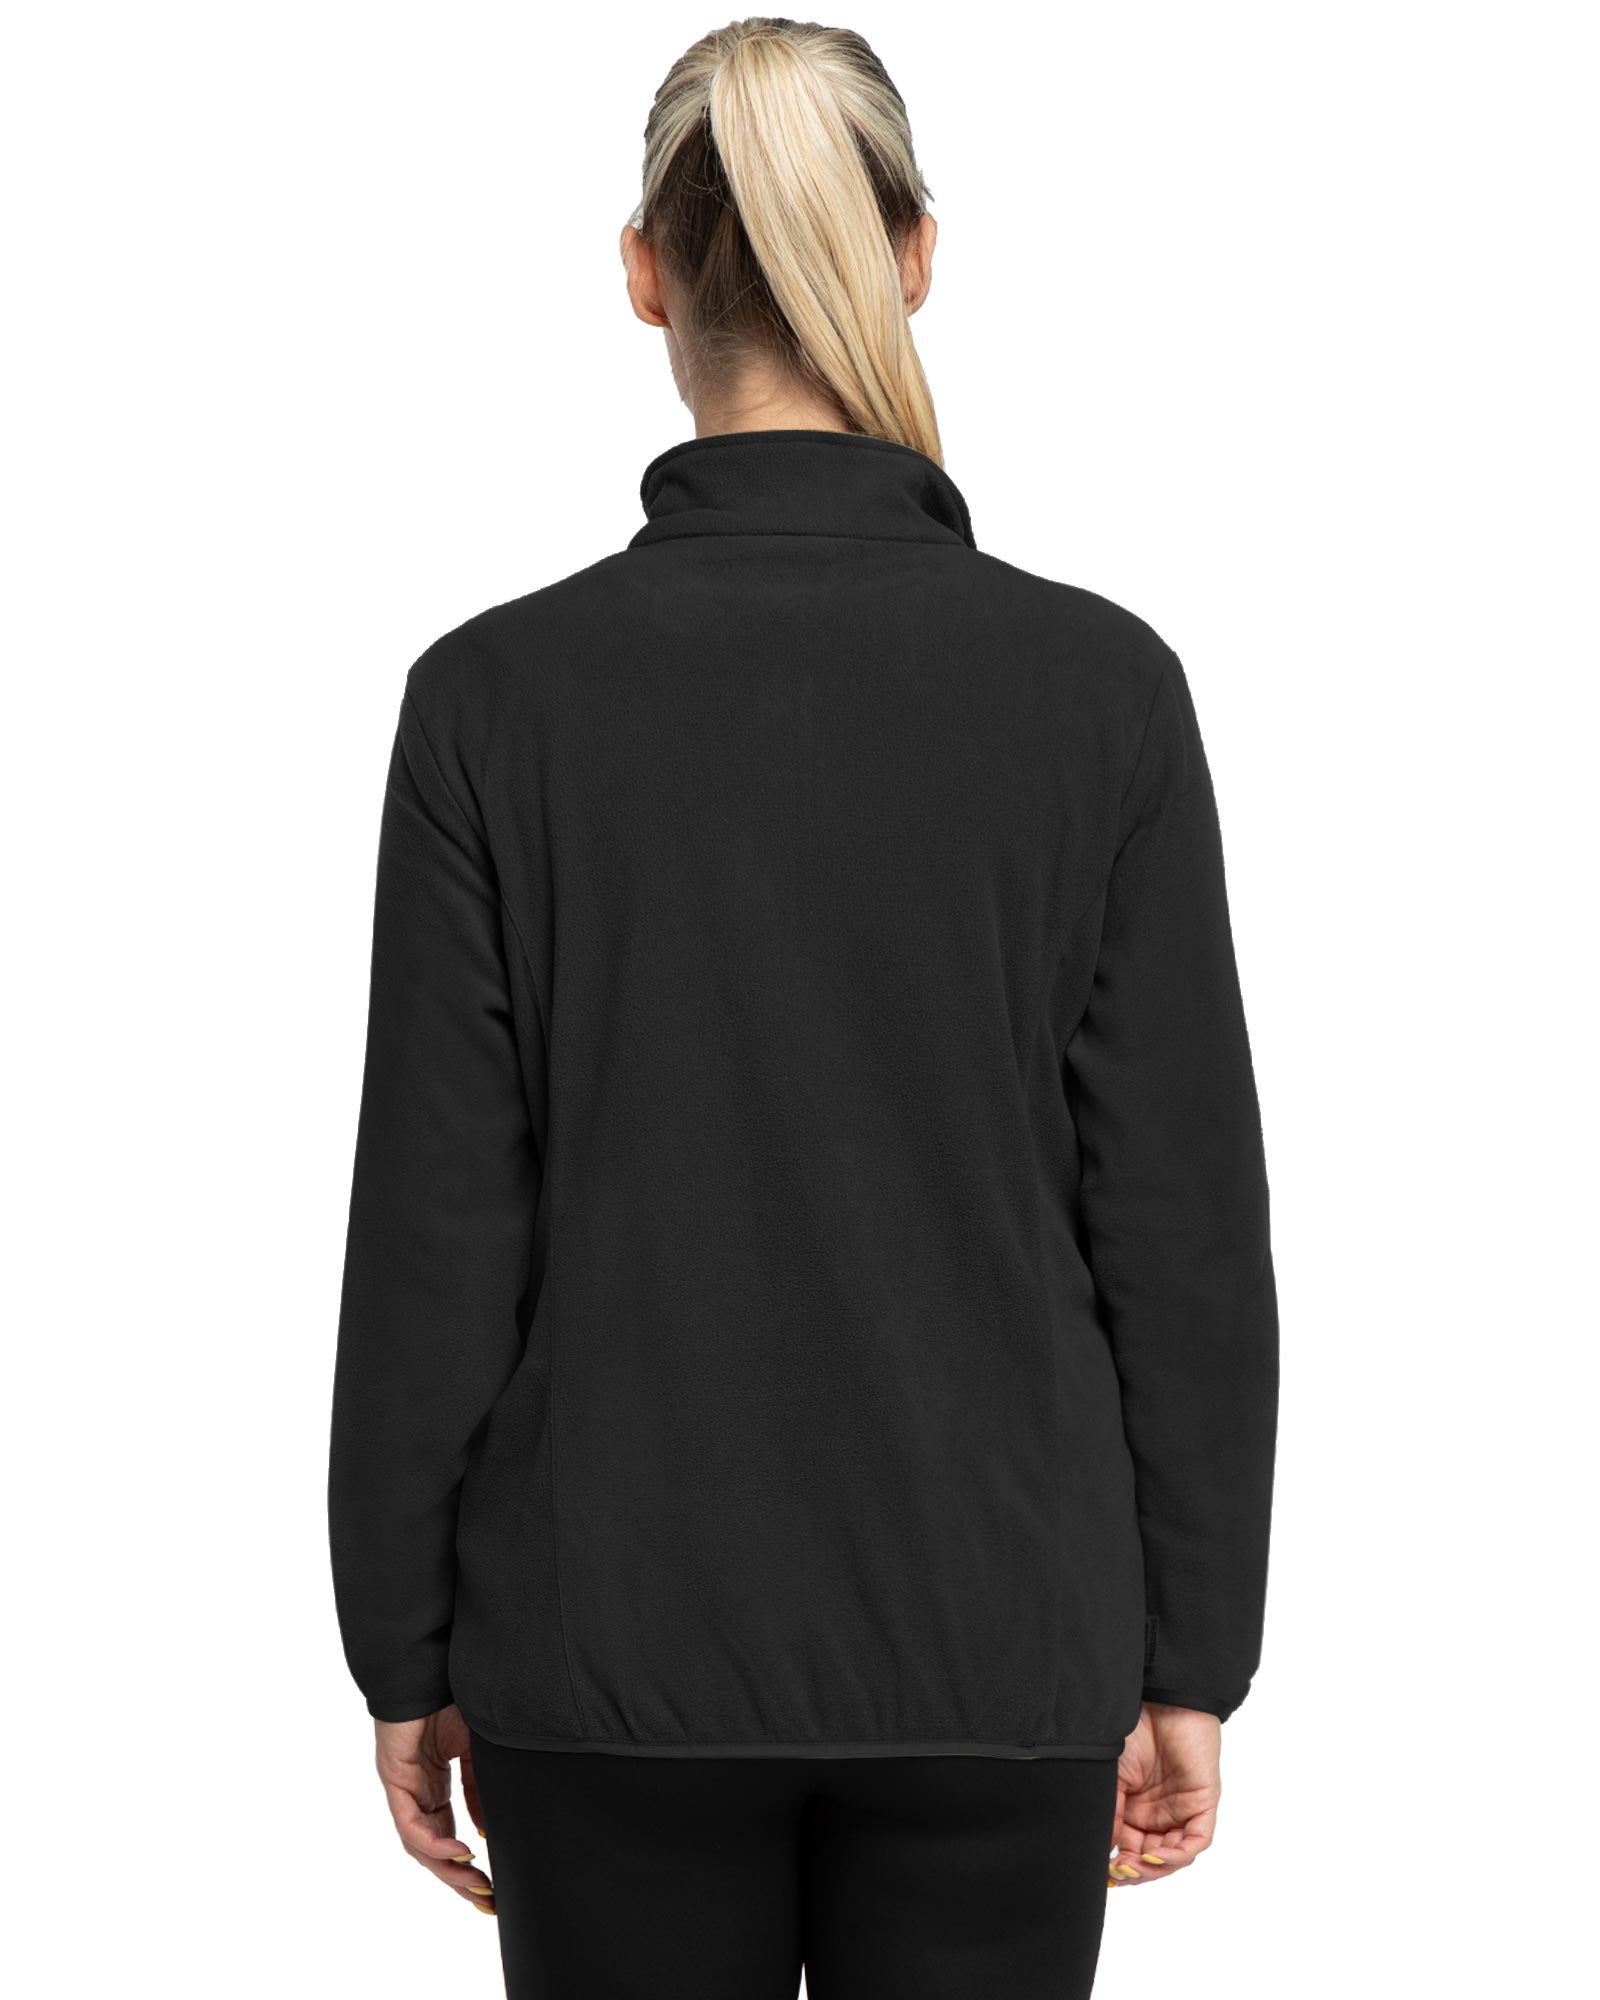 Tangerine Jacket Womens Activewear Size Small - Black Full zip w zip  pockets 